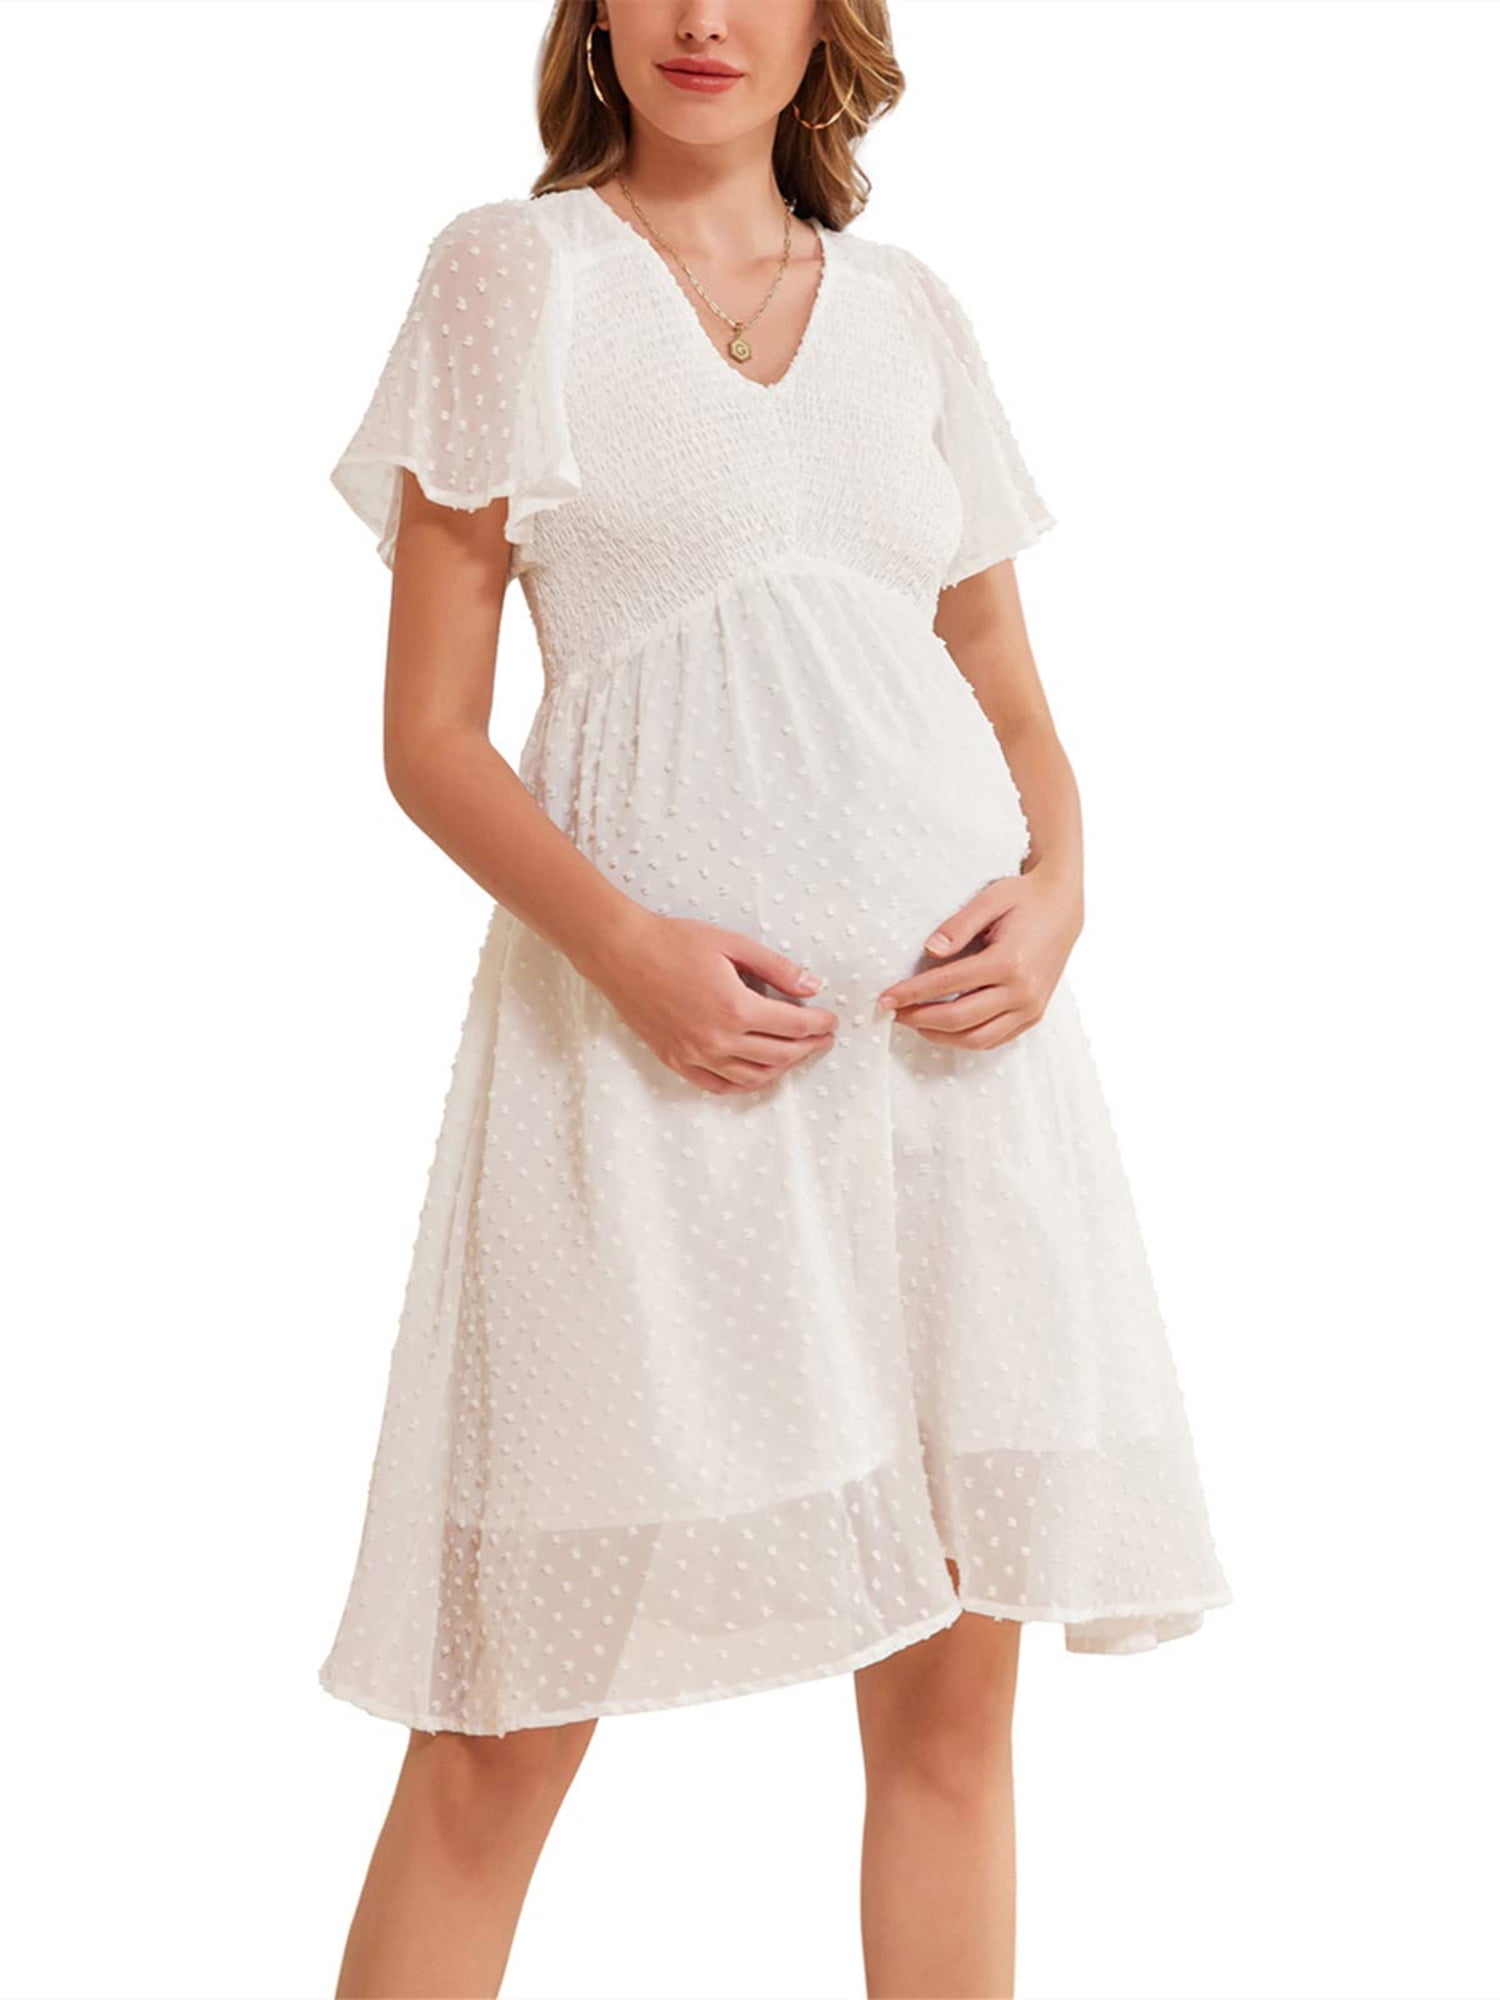 SHEIN USA | Dresses for pregnant women, Maternity dress pattern, Cute maternity  dresses